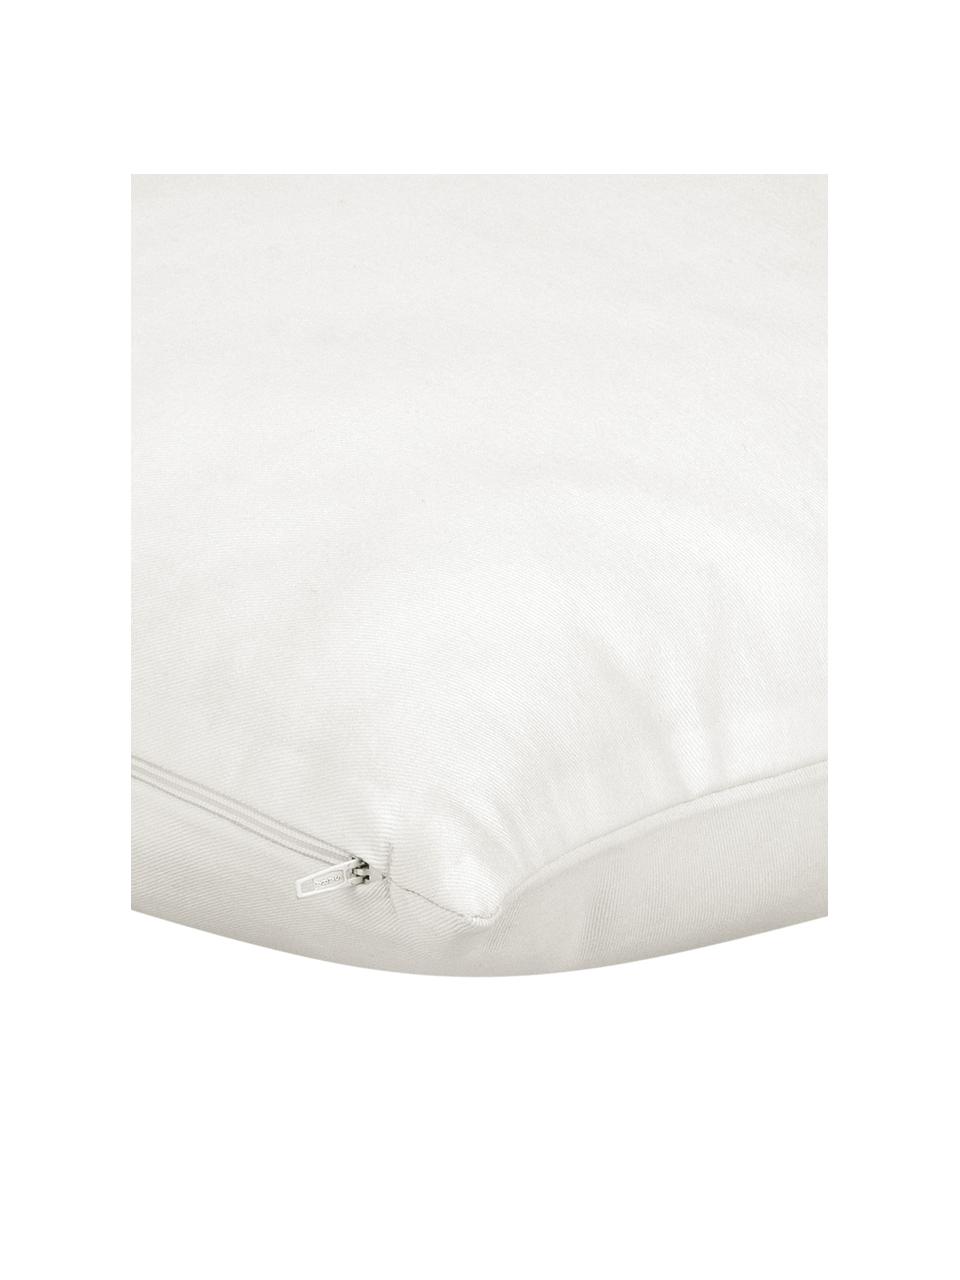 Federa arredo in cotone bianco Mads, 100% cotone, Bianco crema, Larg. 30 x Lung. 50 cm